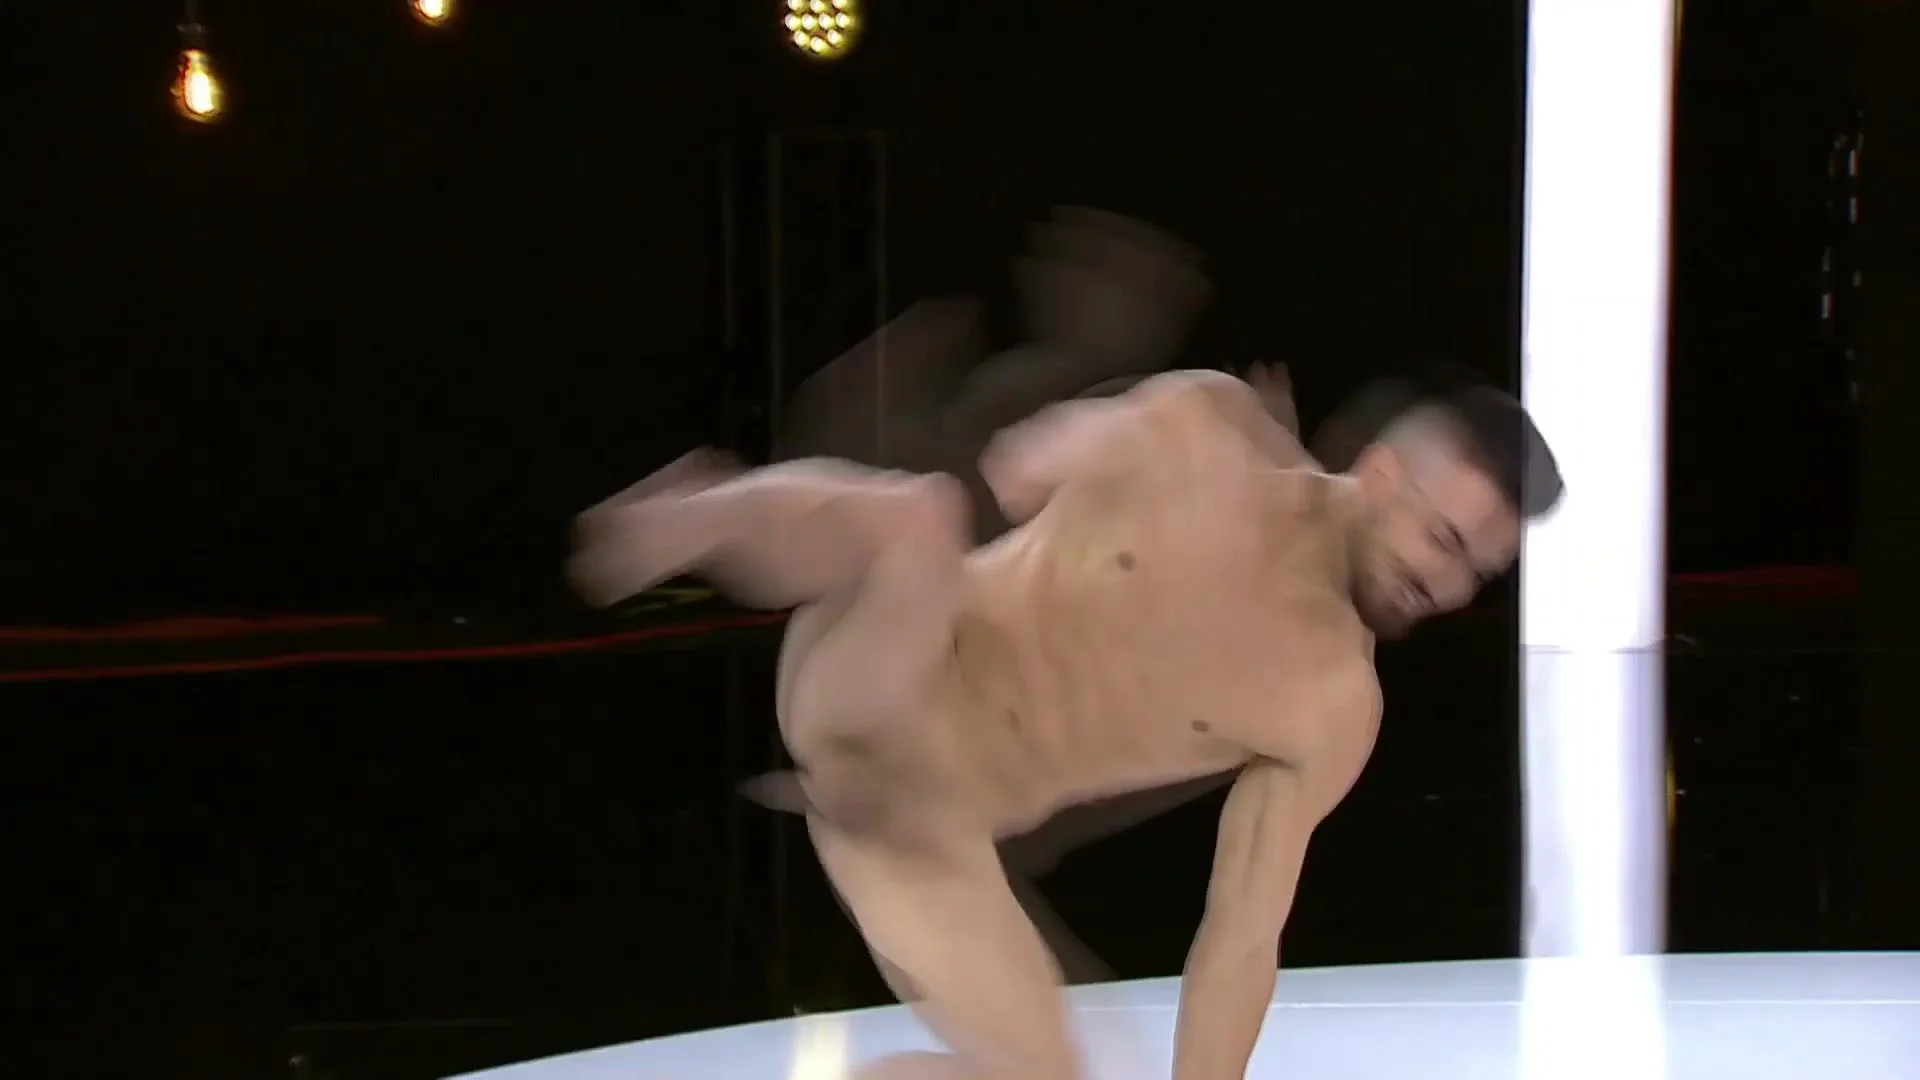 Breakdancing Porn - Hot hung Italian guy breakdances naked - ThisVid.com